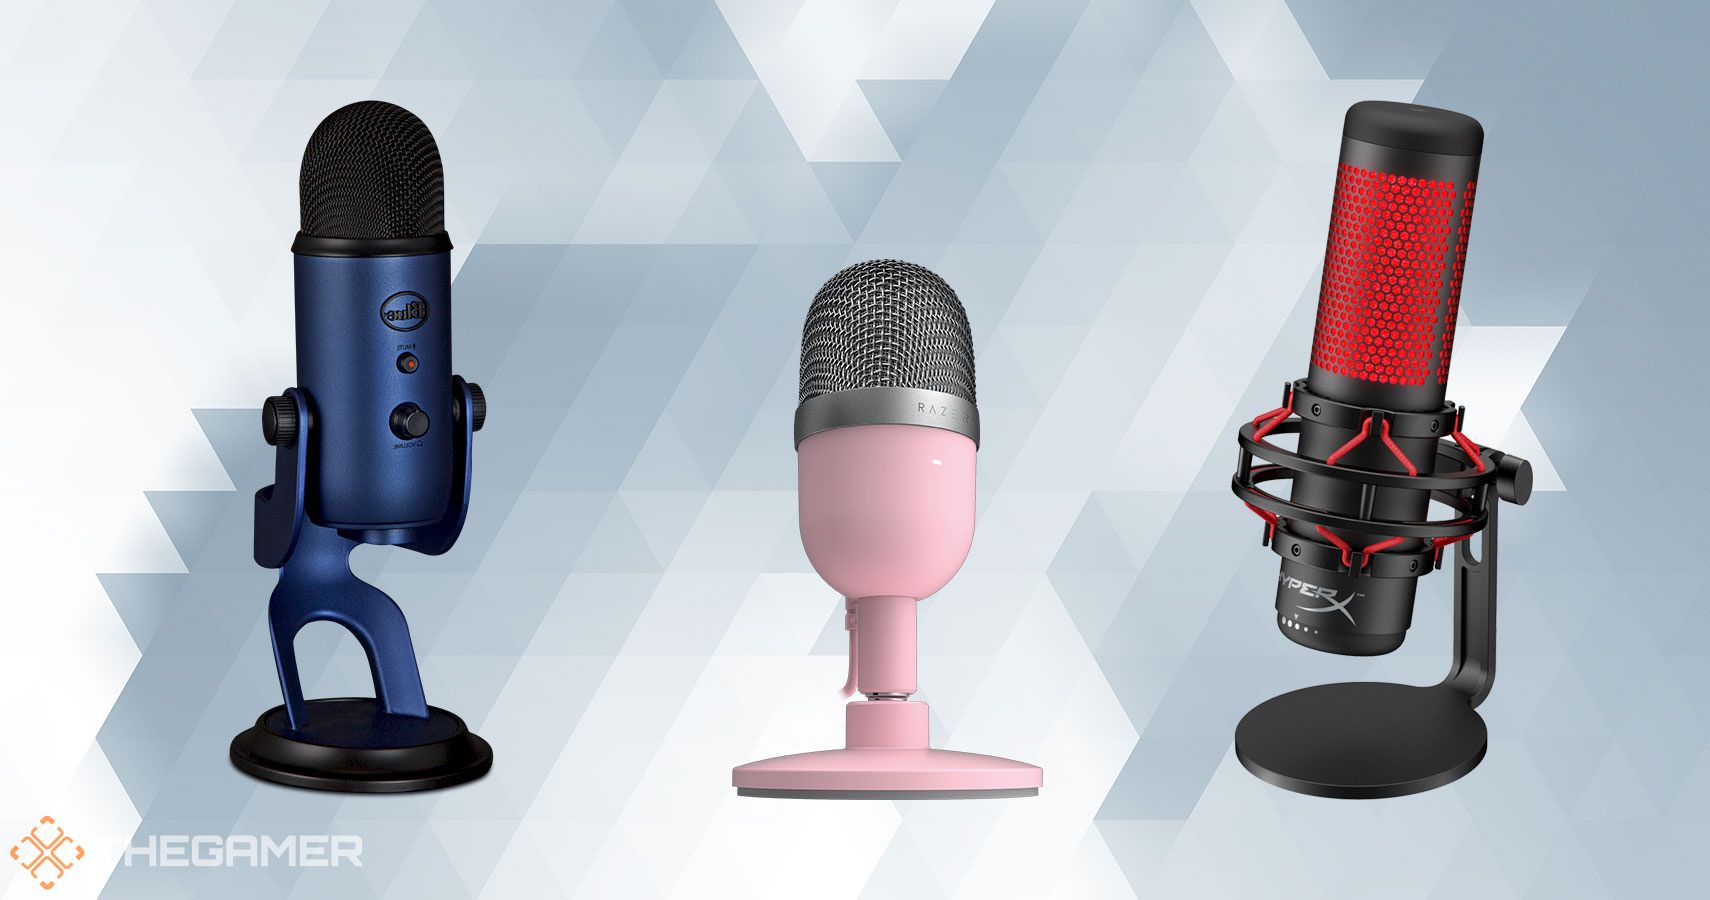 Rode's new mini USB microphone is here to take on the Yeti Nano